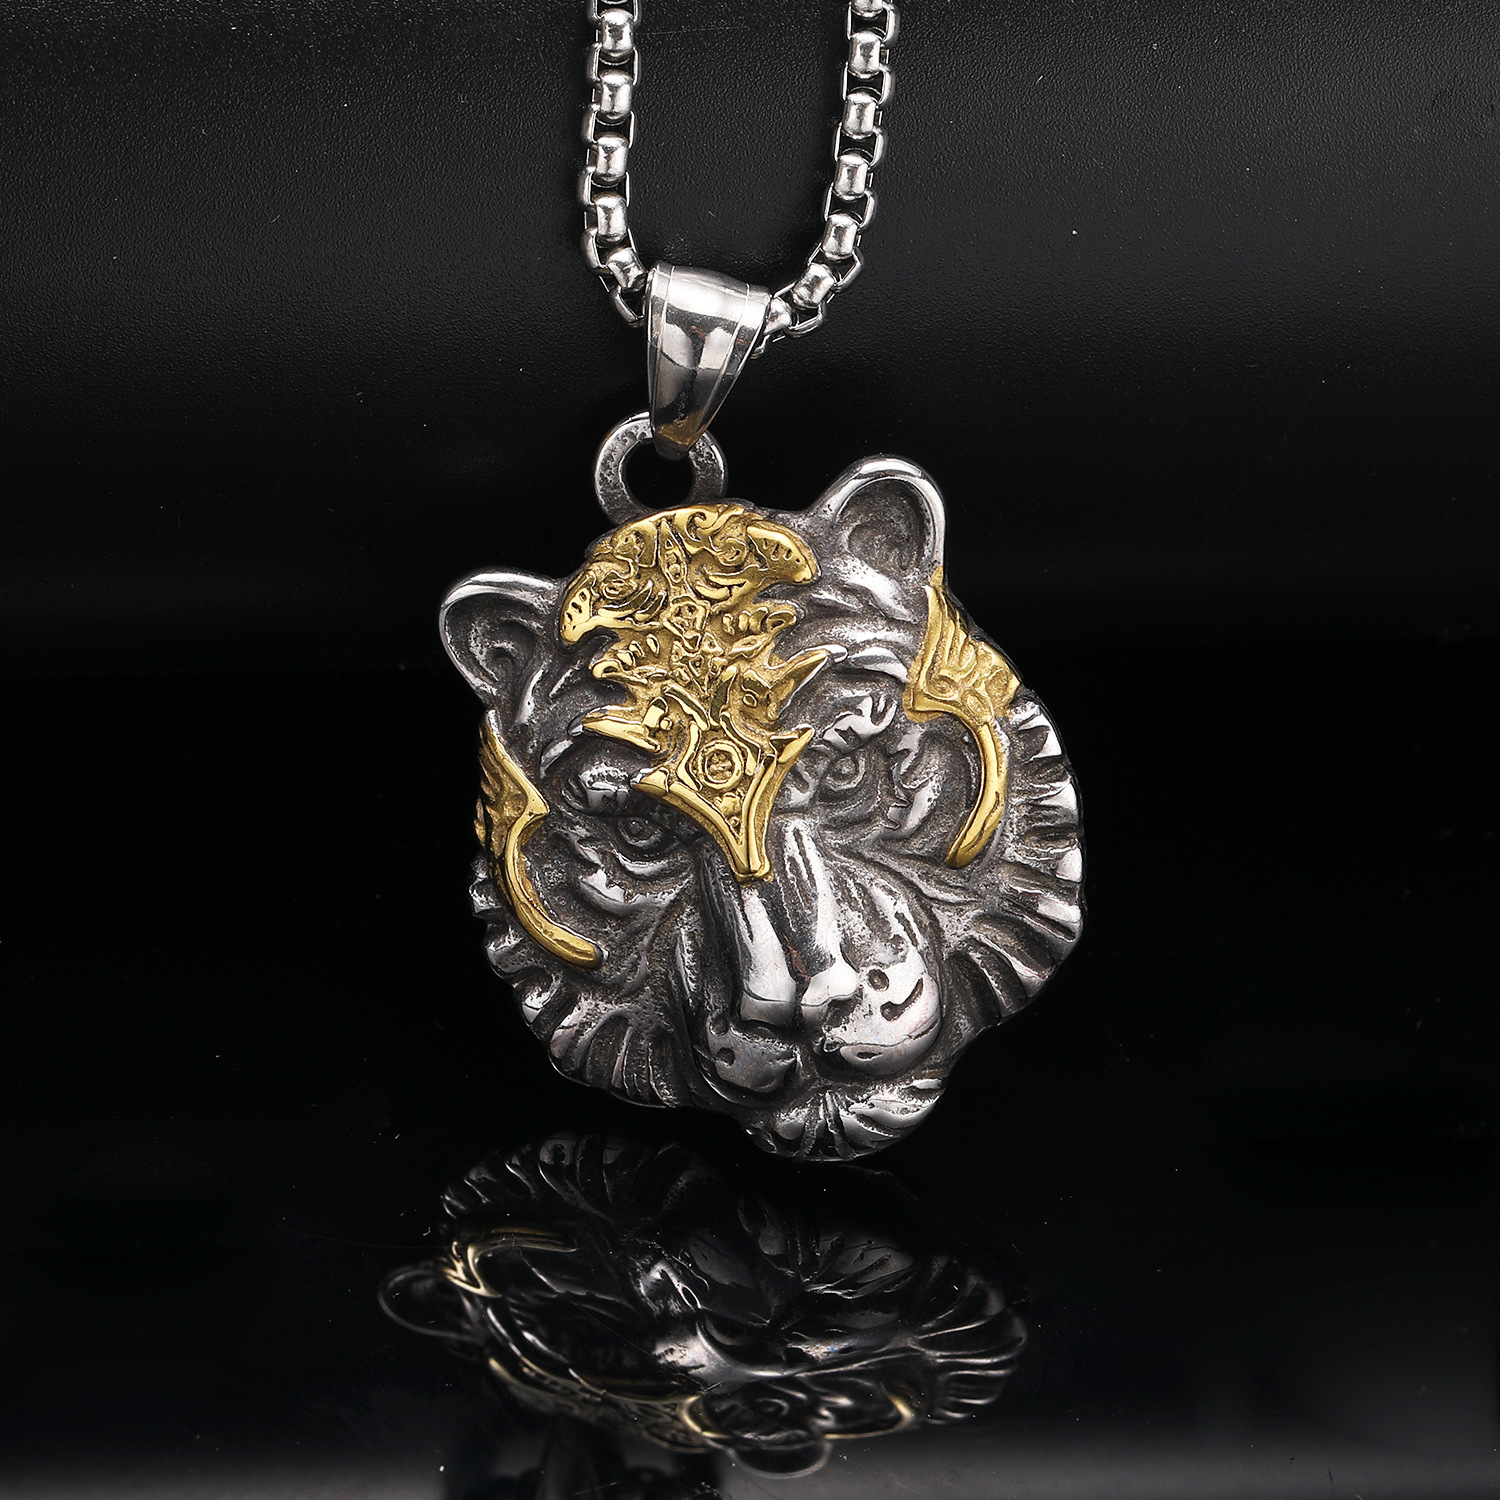 2:A gold pendant